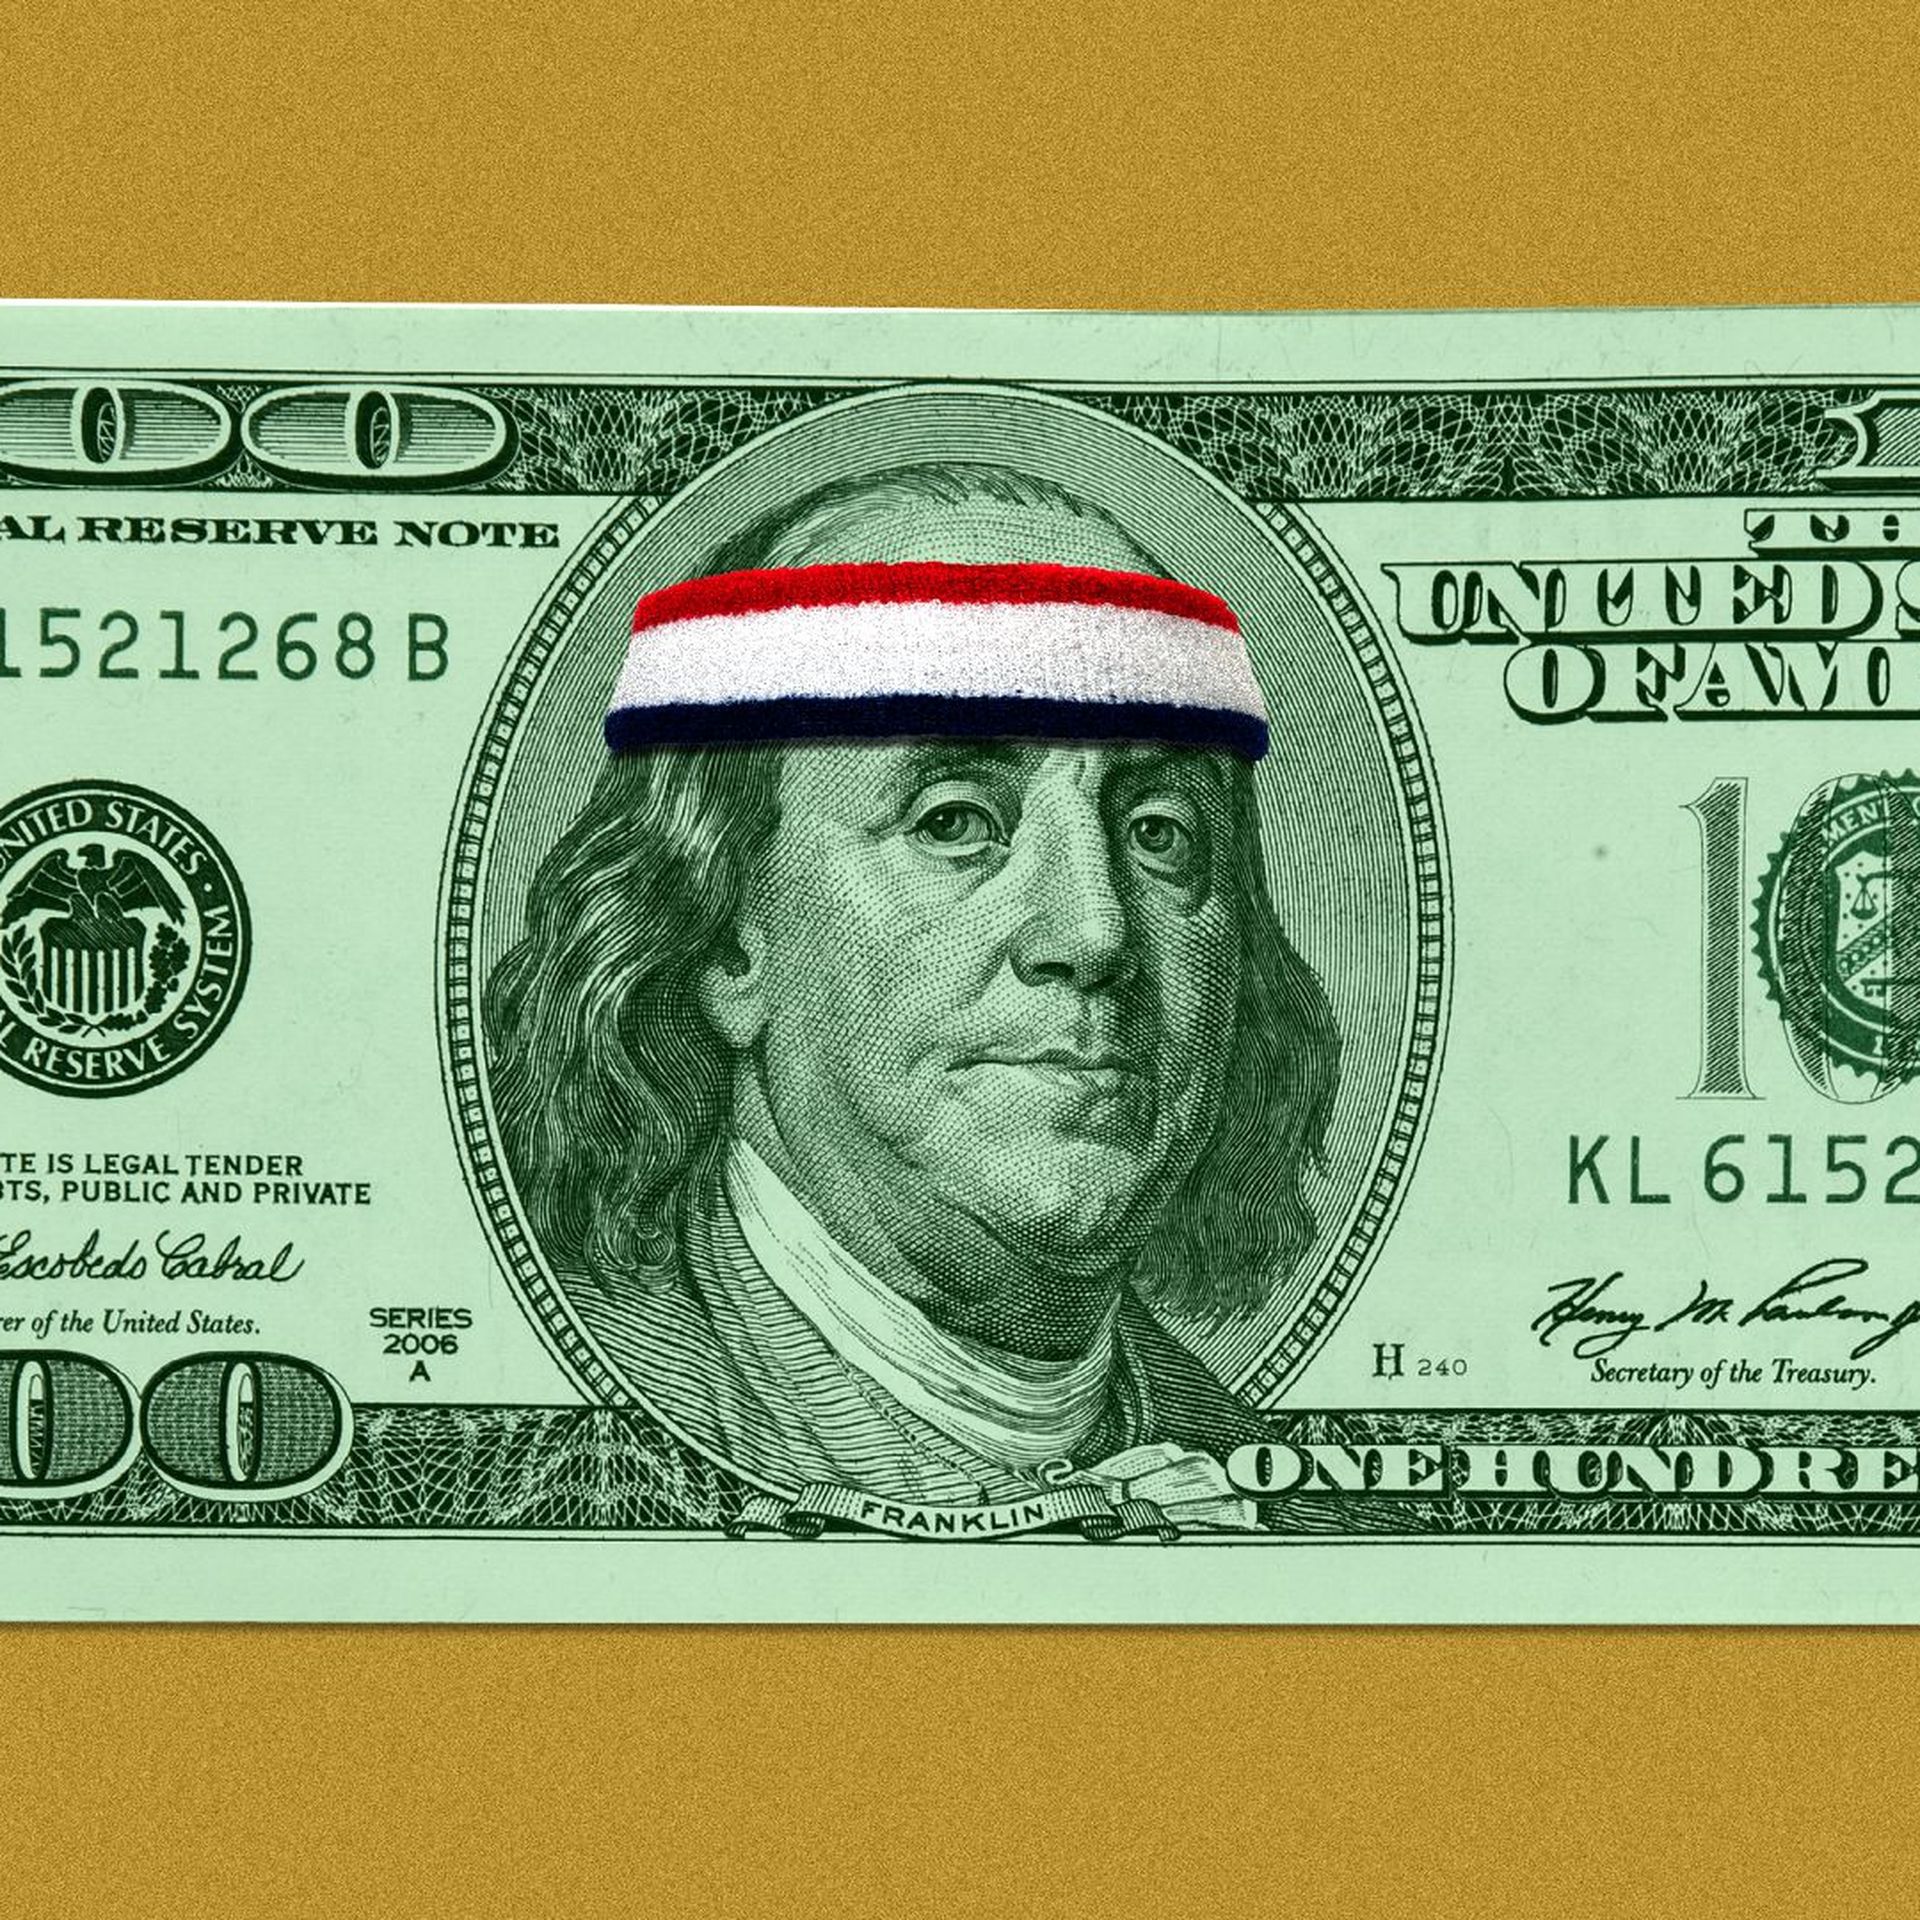 Illustration of Ben Franklin on $100 bill wearing a sweatband.